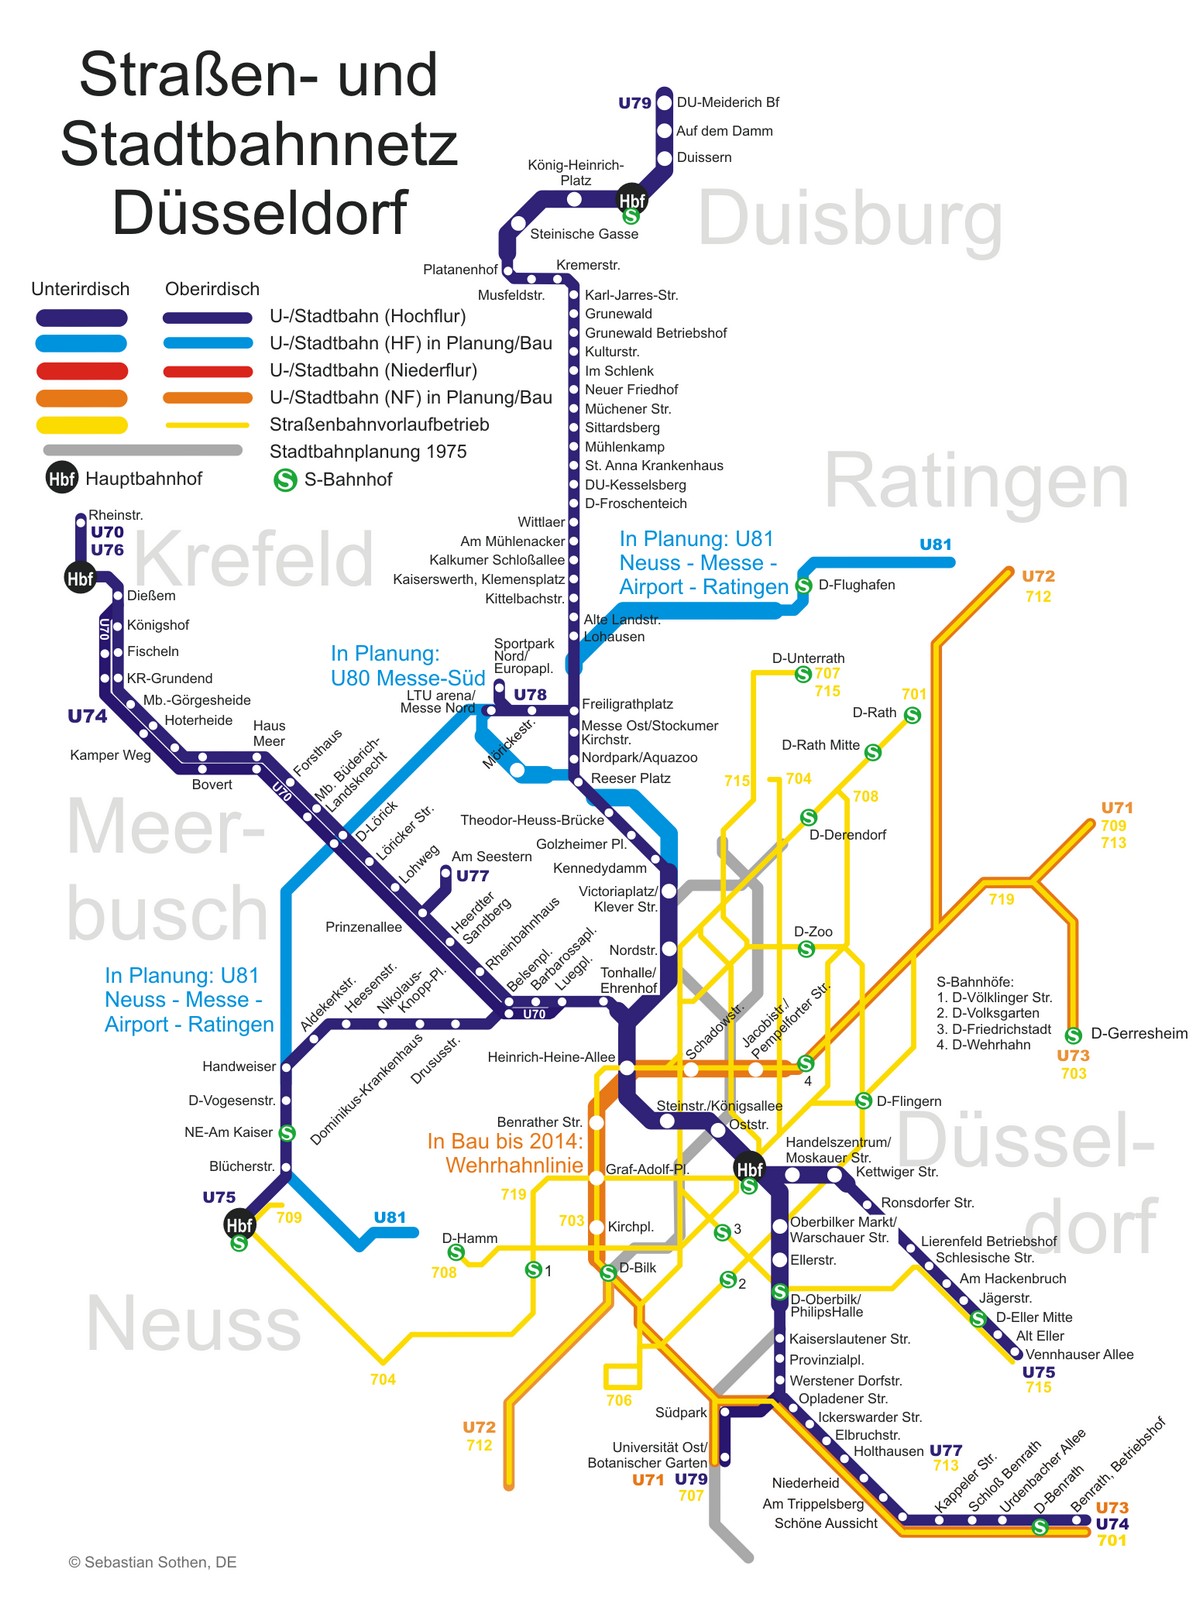 dusseldorf travel reddit